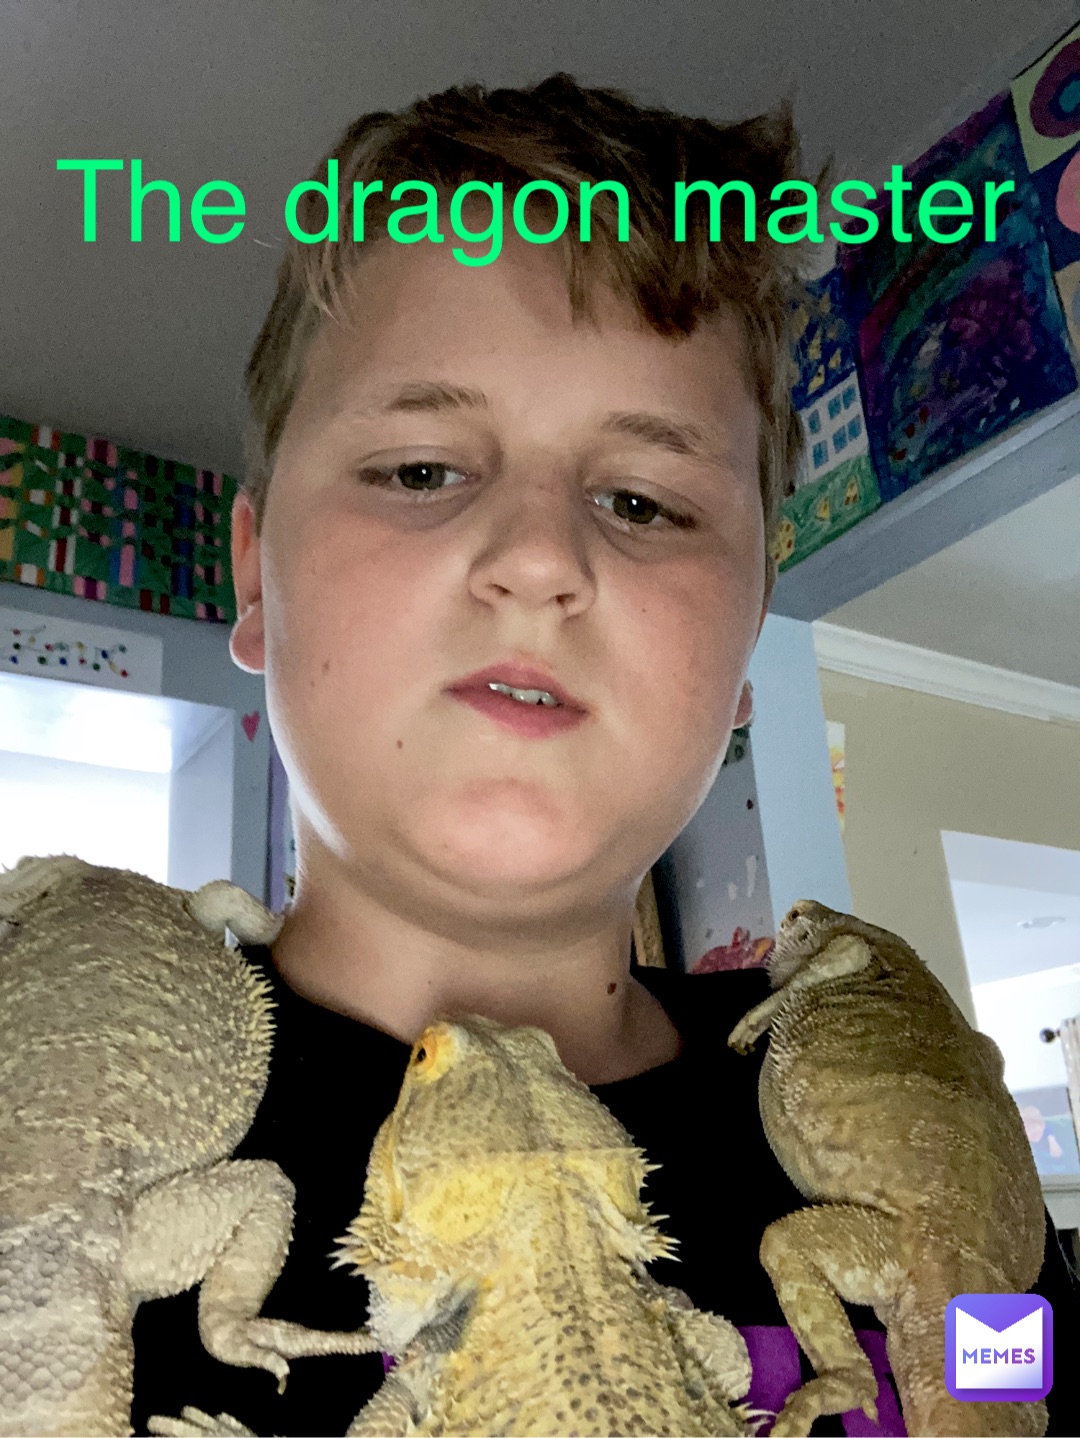 The dragon master